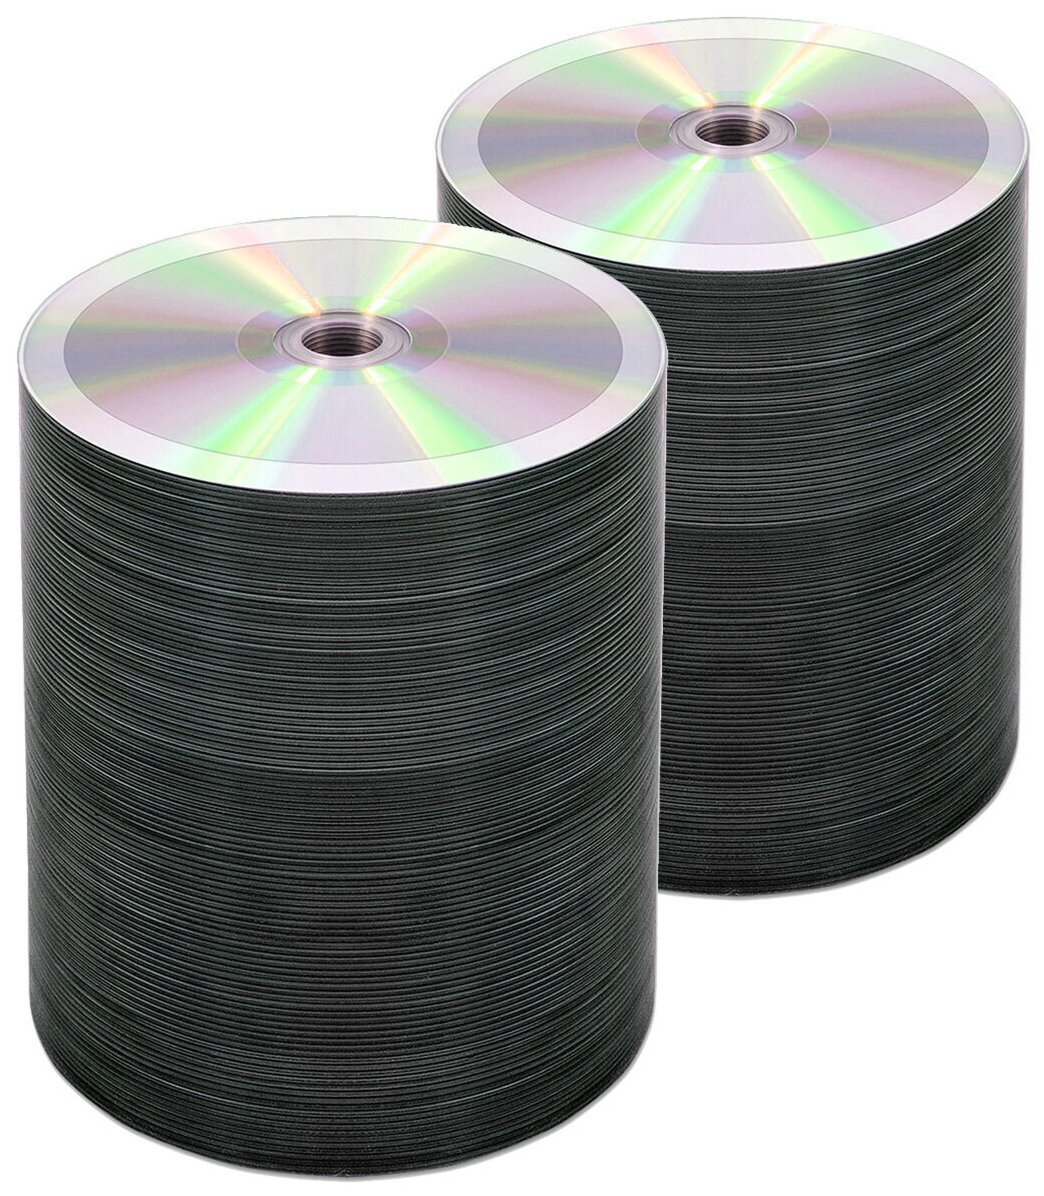 Диск CD-R CMC 700Mb 52x non-print (без покрытия) bulk, упаковка 200 шт.